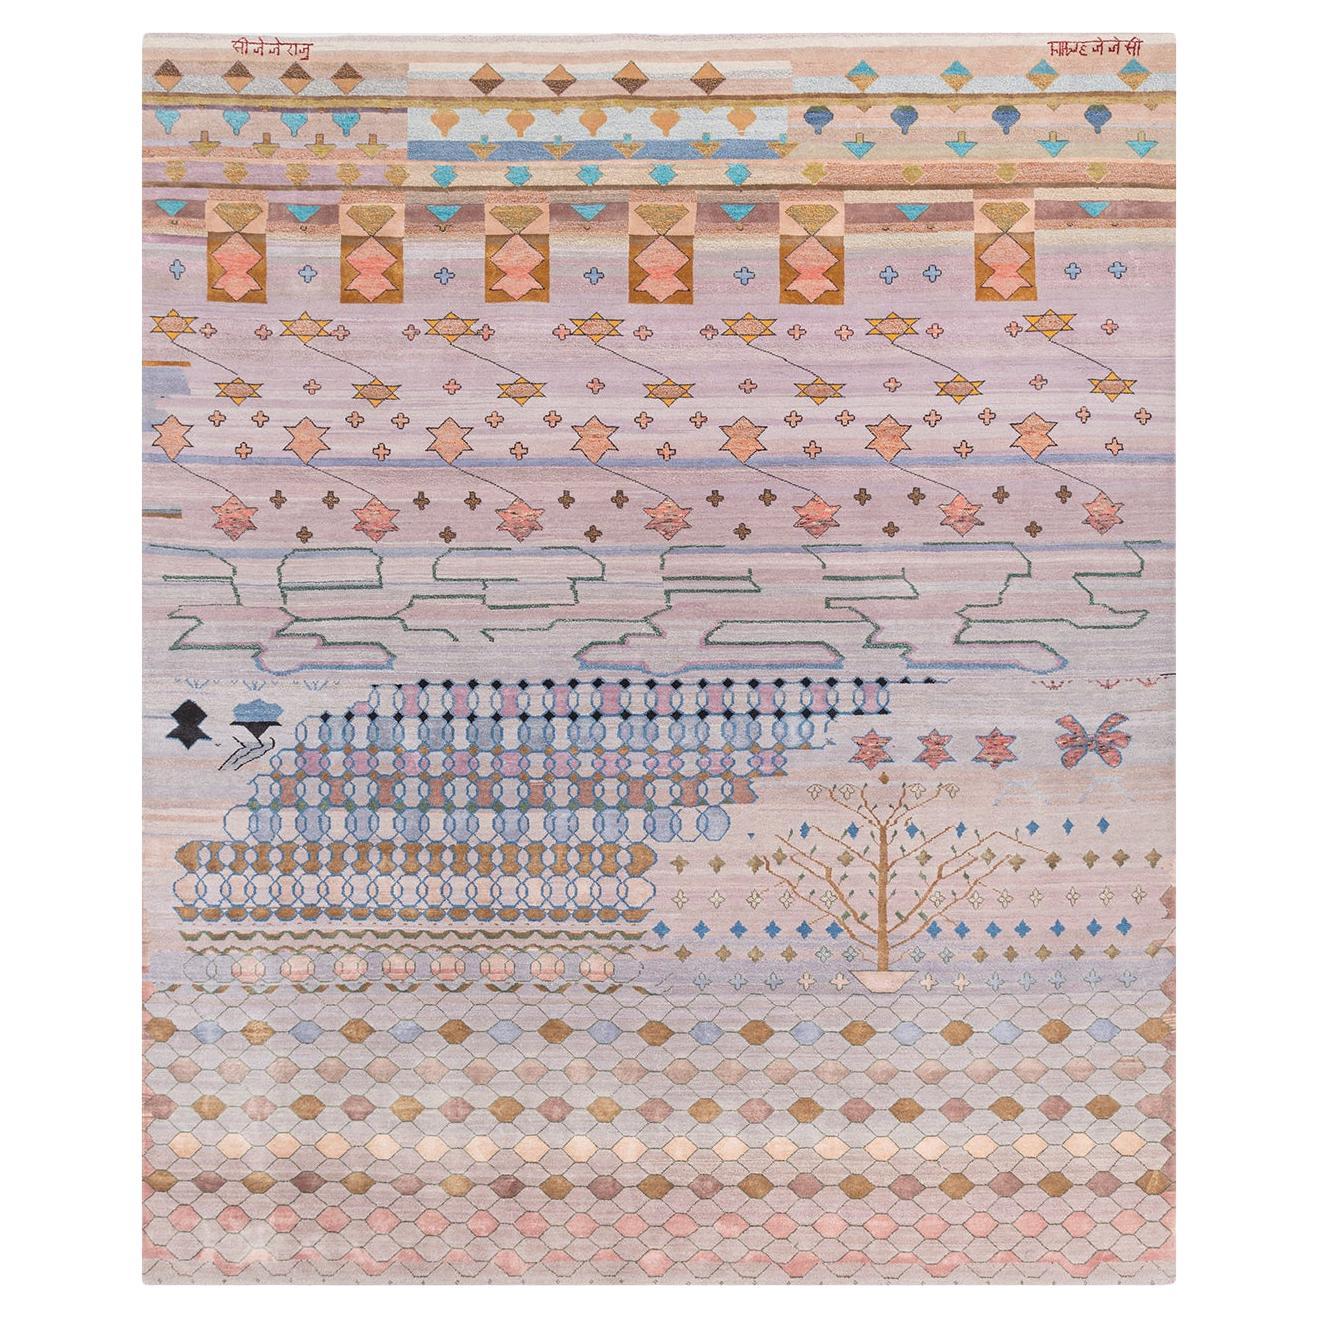 Einzigartiger Aprezo-Teppich, geknüpft, Wolle, Bambusseide, 240x300cm